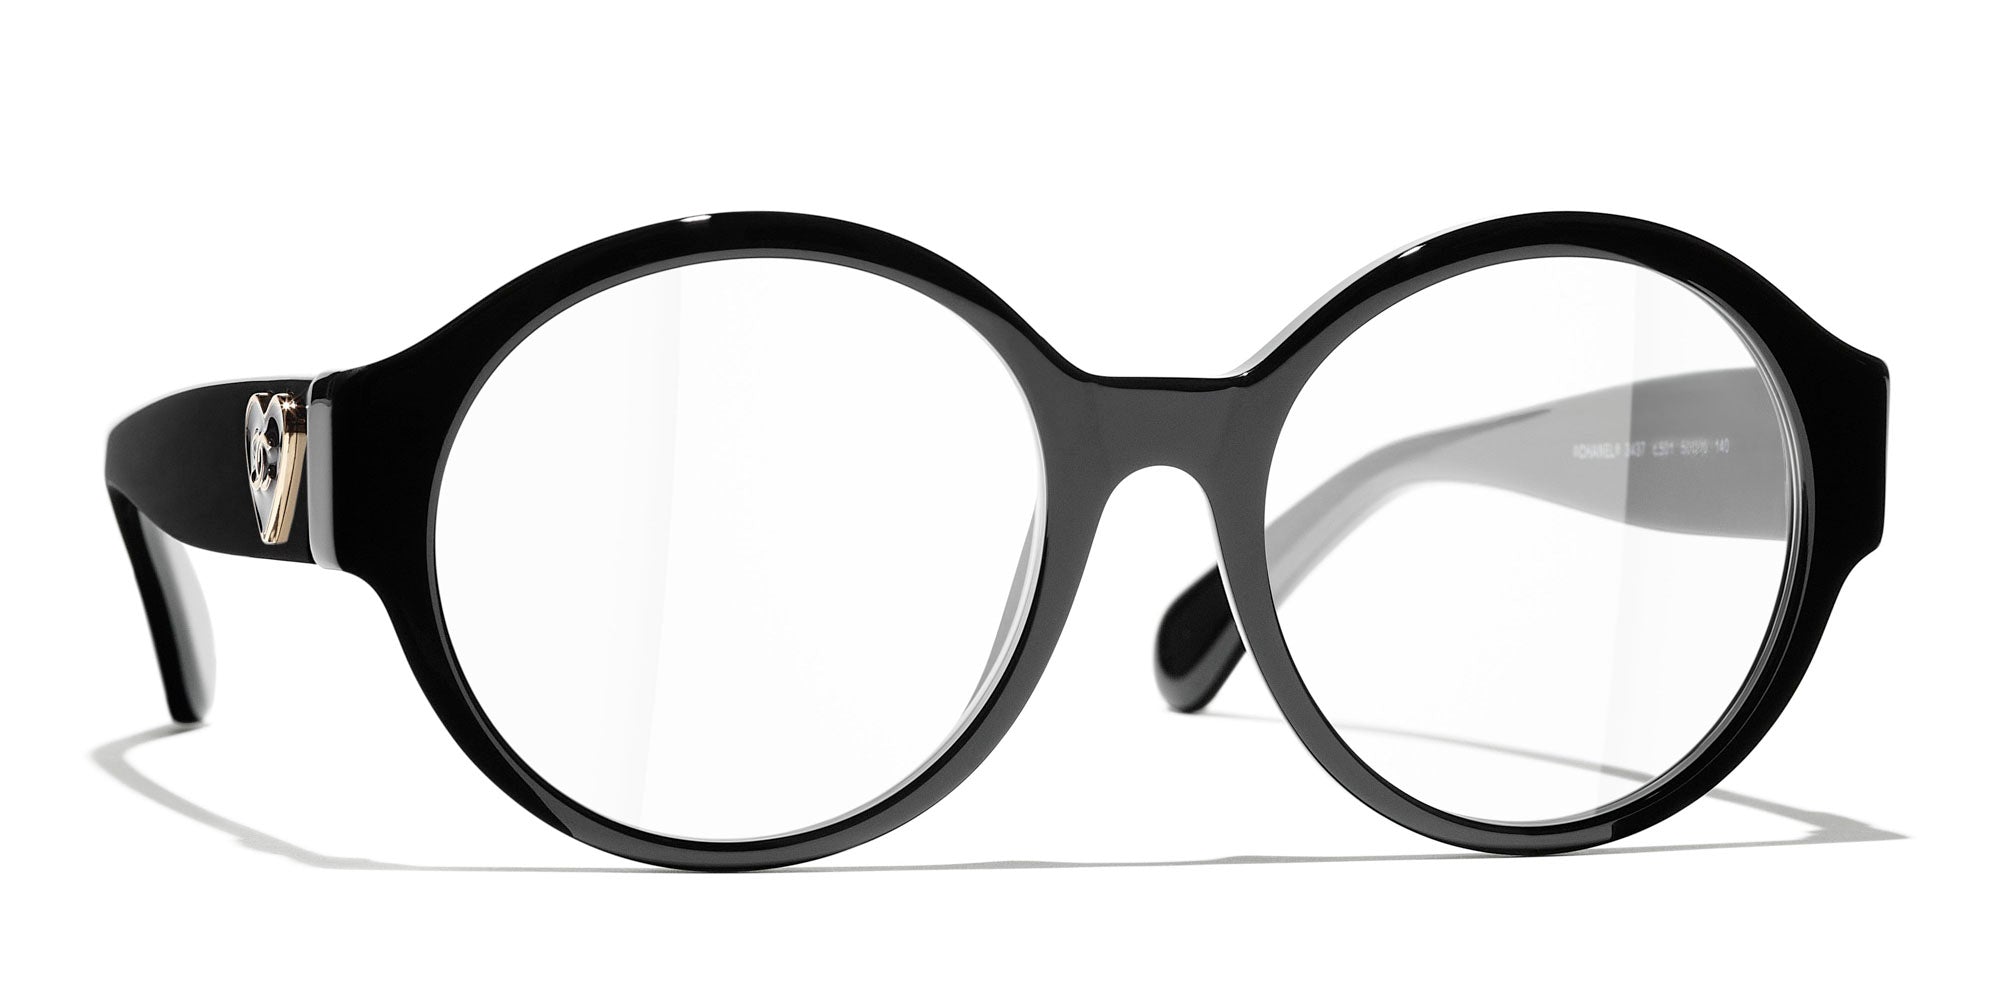 CHANEL 3437 Round Acetate Glasses (Women) – F/E – Fashion Eyewear